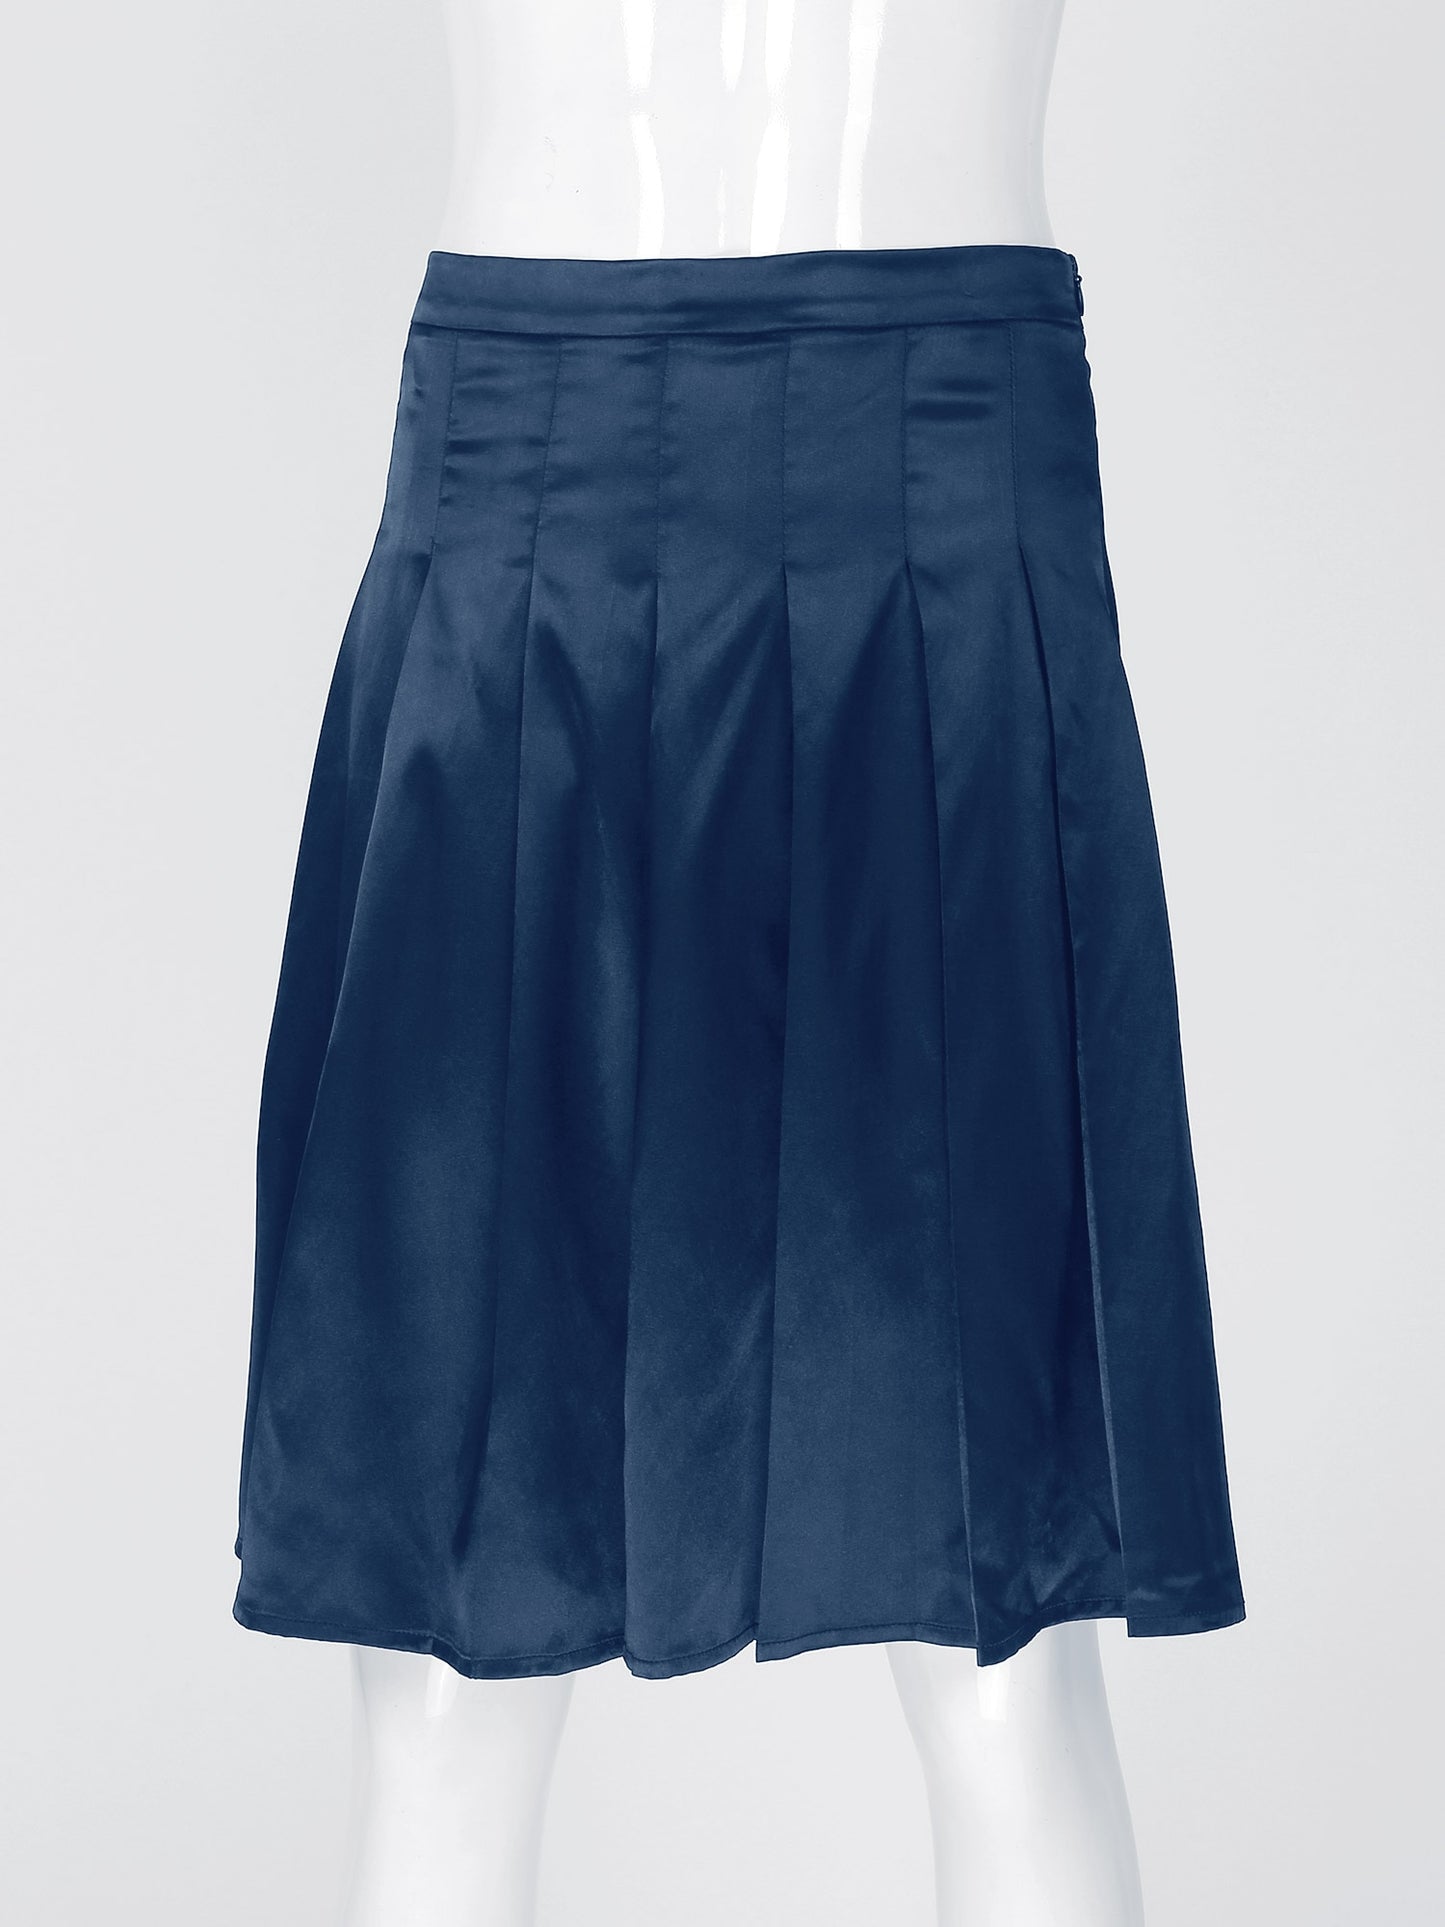 Satin Skirt: Crossdresser's Nightwear and Loungewear